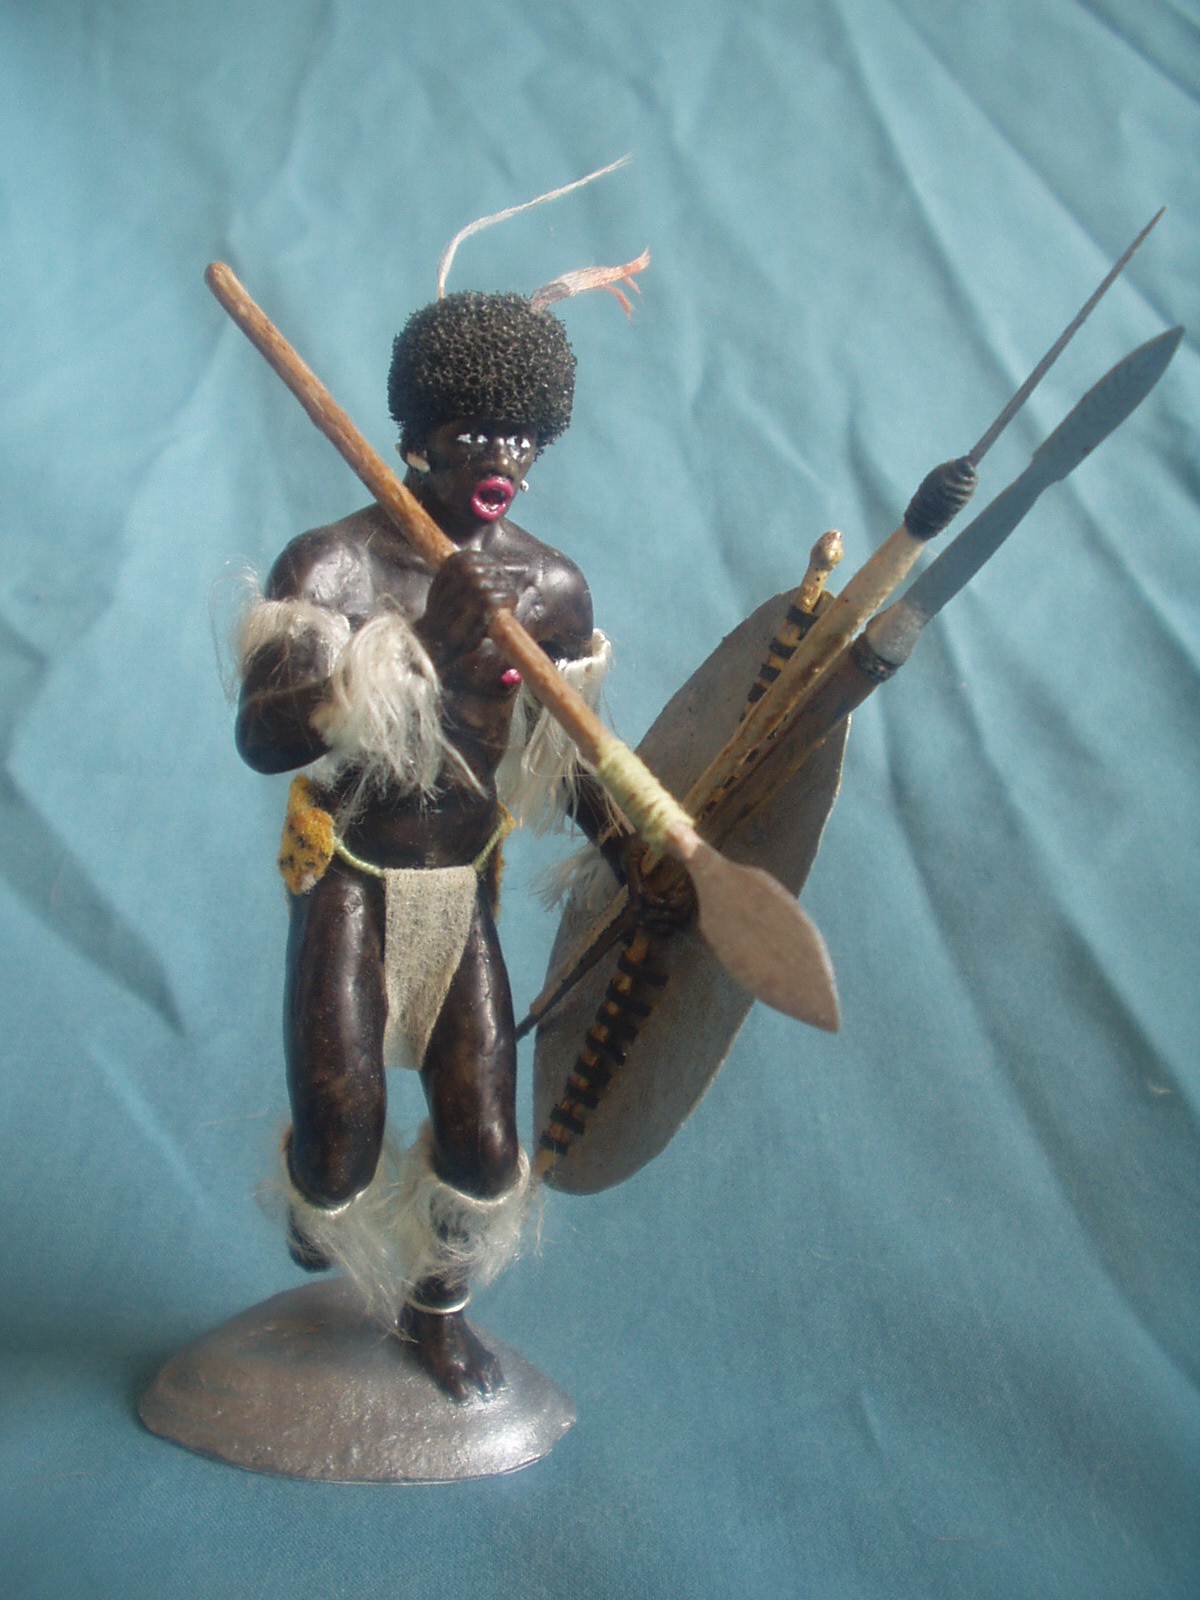 Історична мініатюра. "Воїн з племені Зулу. Африка. ХVIII - кінець ХІХ ст."